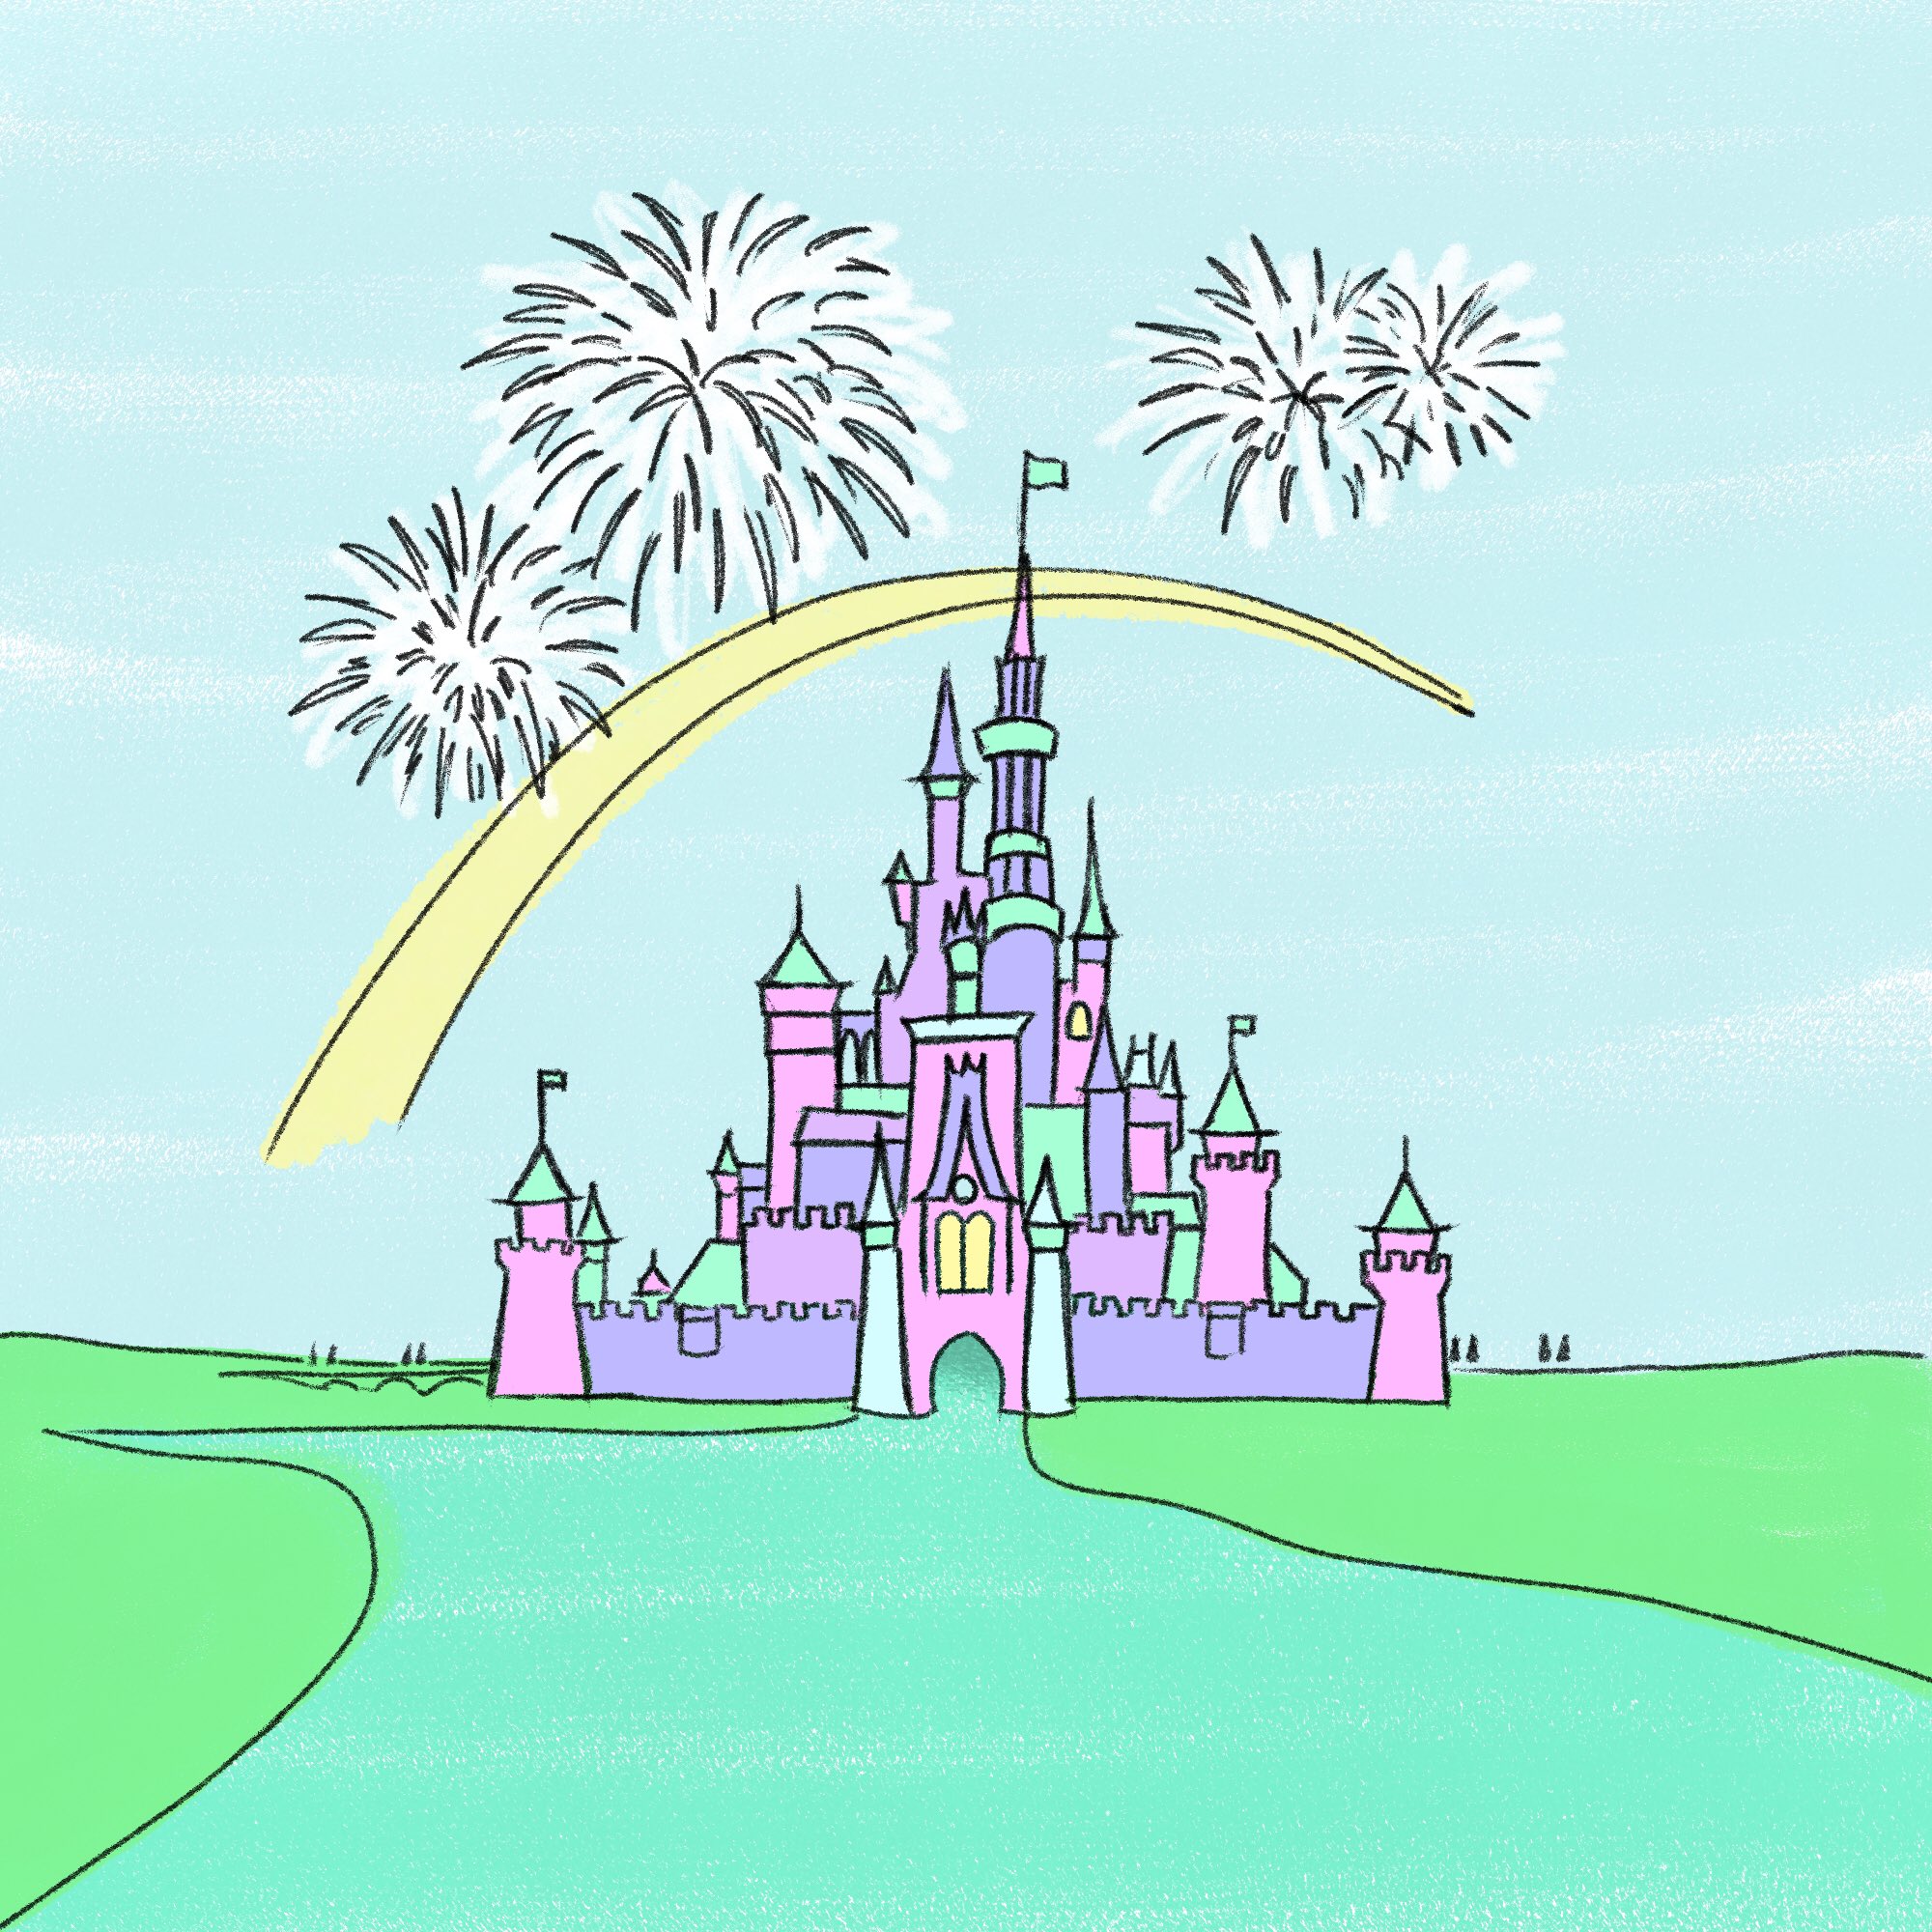 Arisa 有咲 ディズニー映画オープニングロゴ Disney Disneycastle シンデレラ城 Illustration Drawing イラスト T Co F7cxcik4m9 Twitter